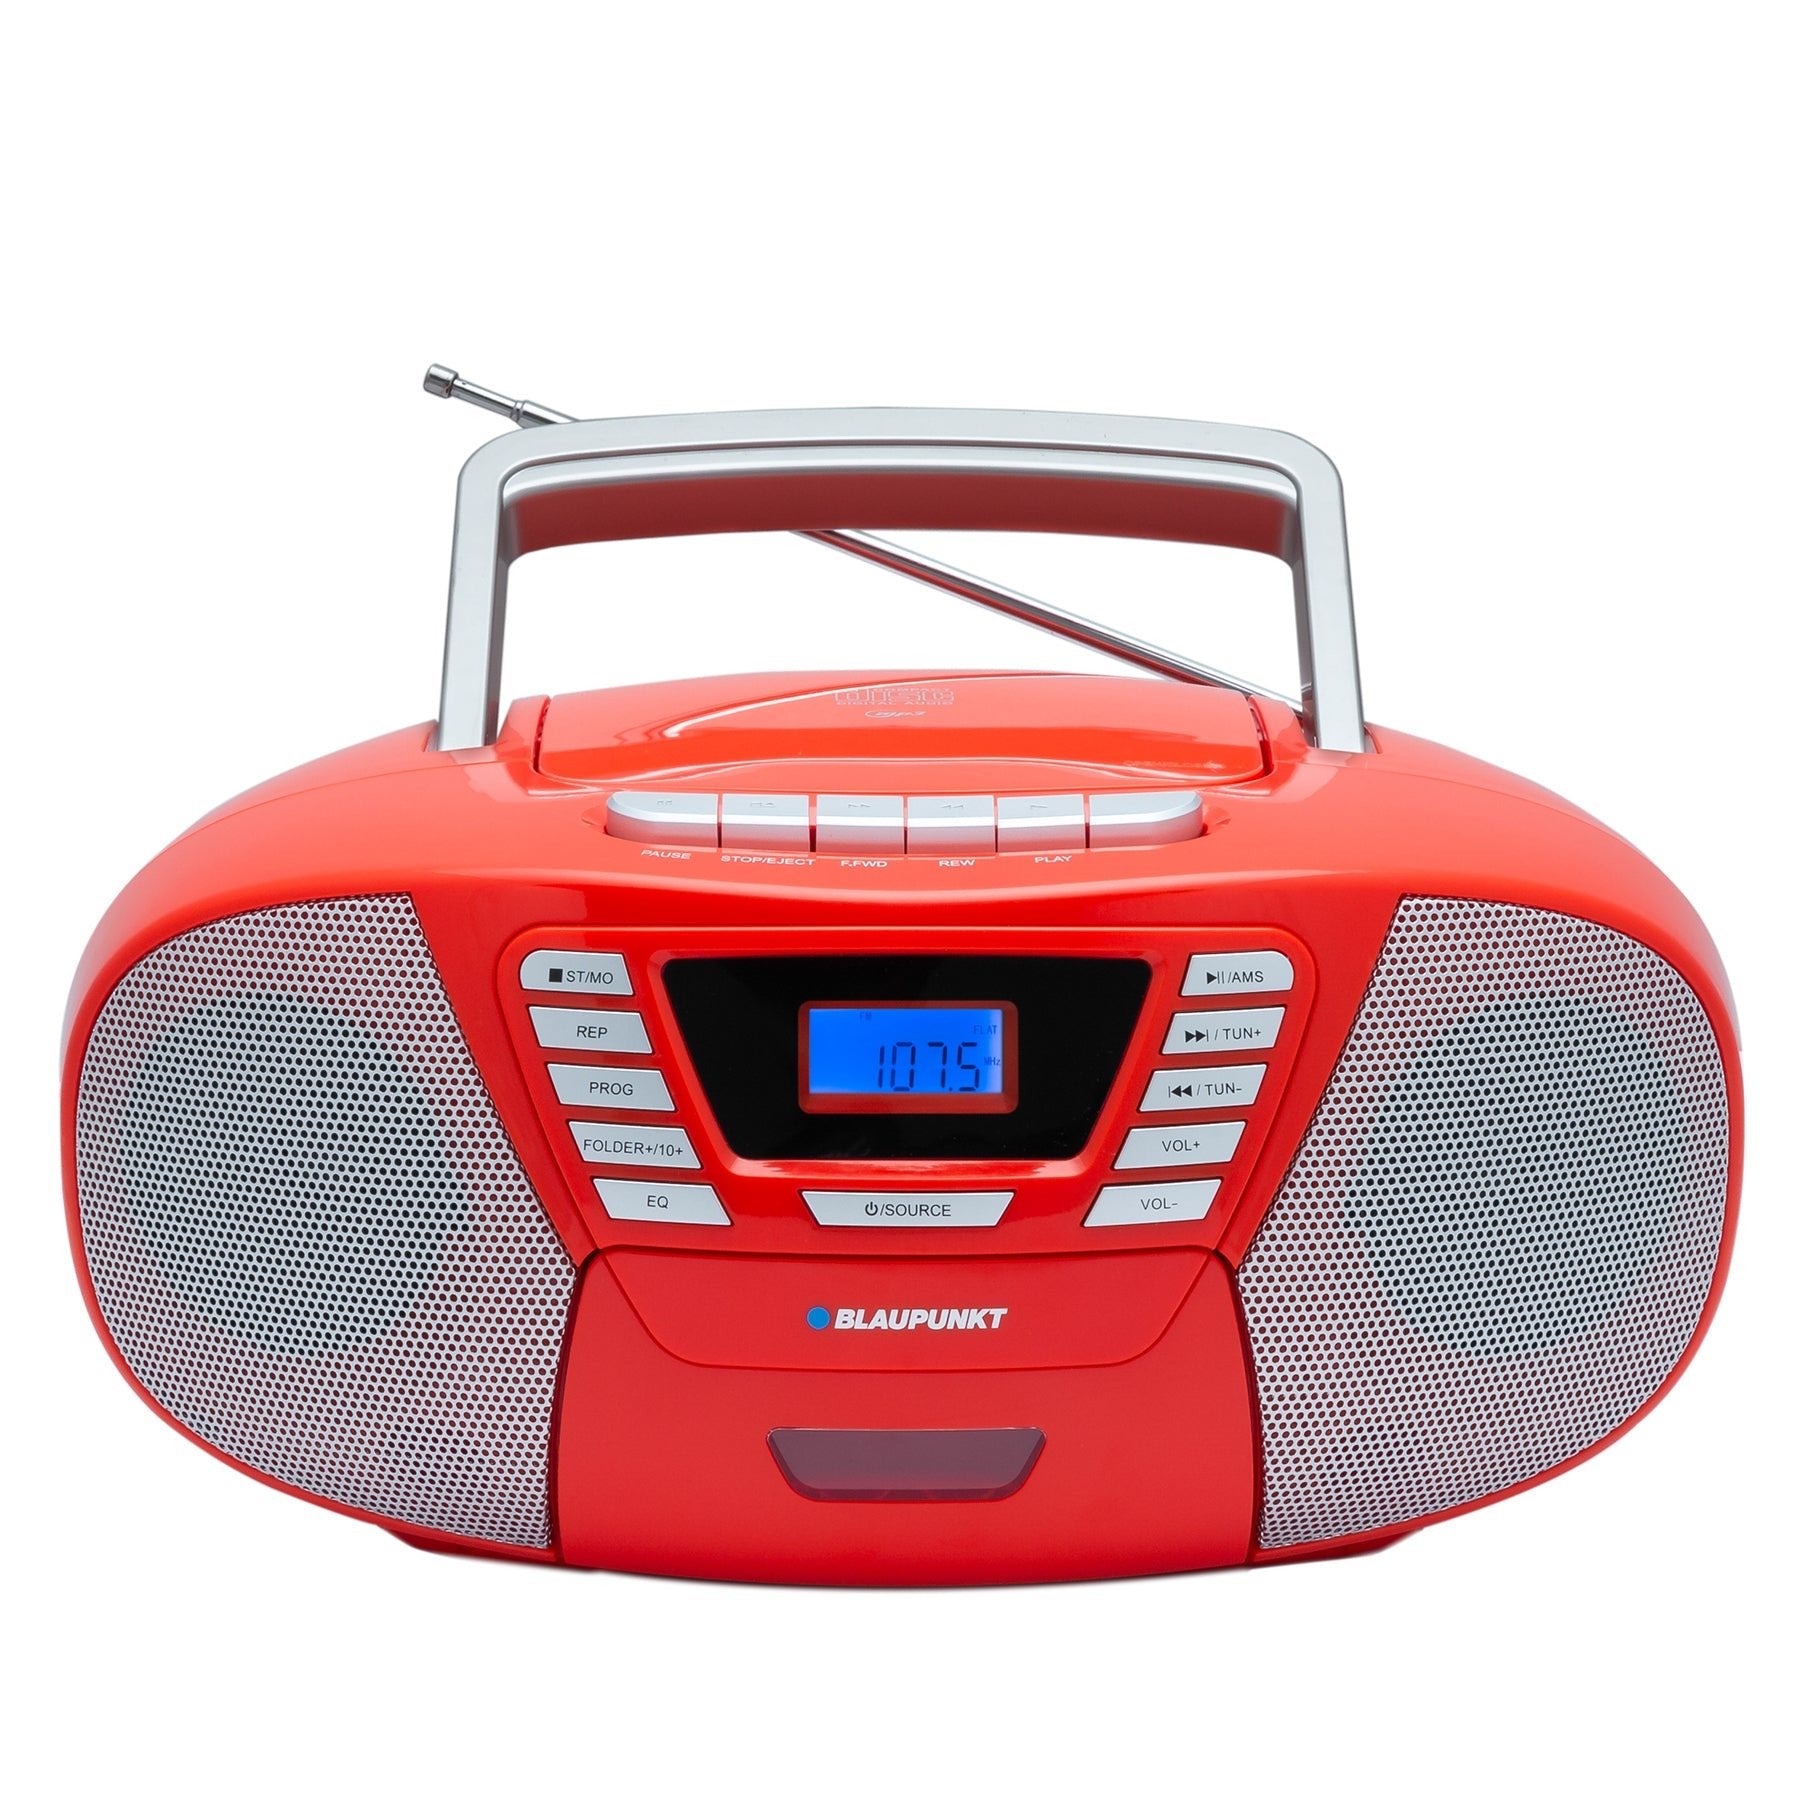 BLAUPUNKT B 120, CD Player Bluetooth Kinder - tragbarer Kassettenrekorder & Kinder CD Player mit Bluetooth Funktion, PLL UKW Radio, AUX & USB Anschluss, mit Griff, Farbe: Rot